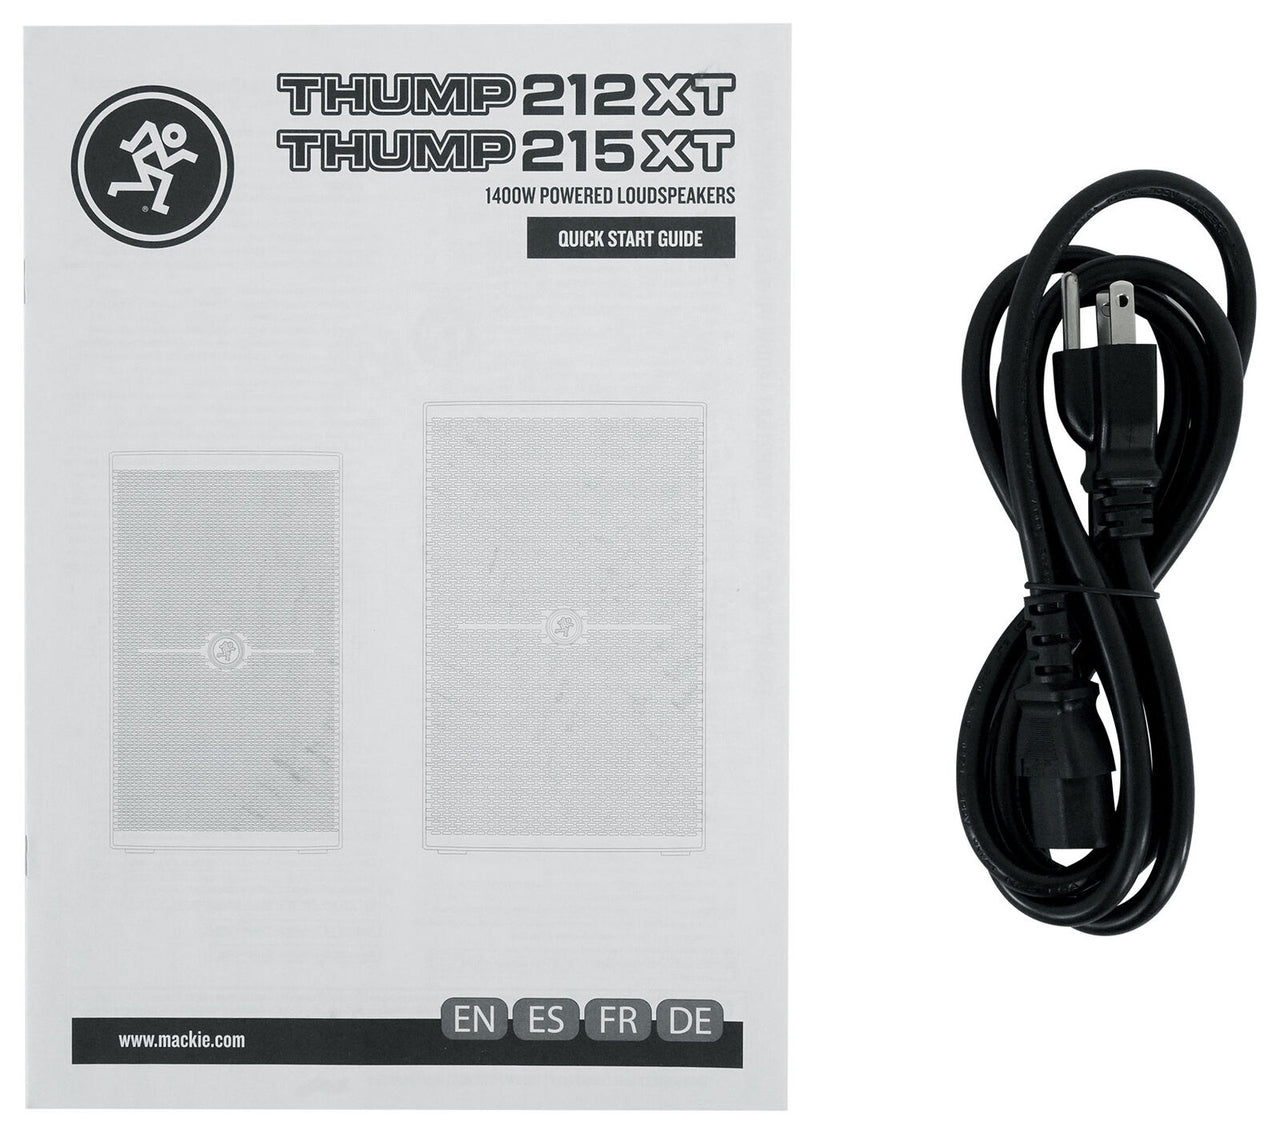 Mackie THUMP212XT 12” 1400W Enhanced Powered Loudspeaker